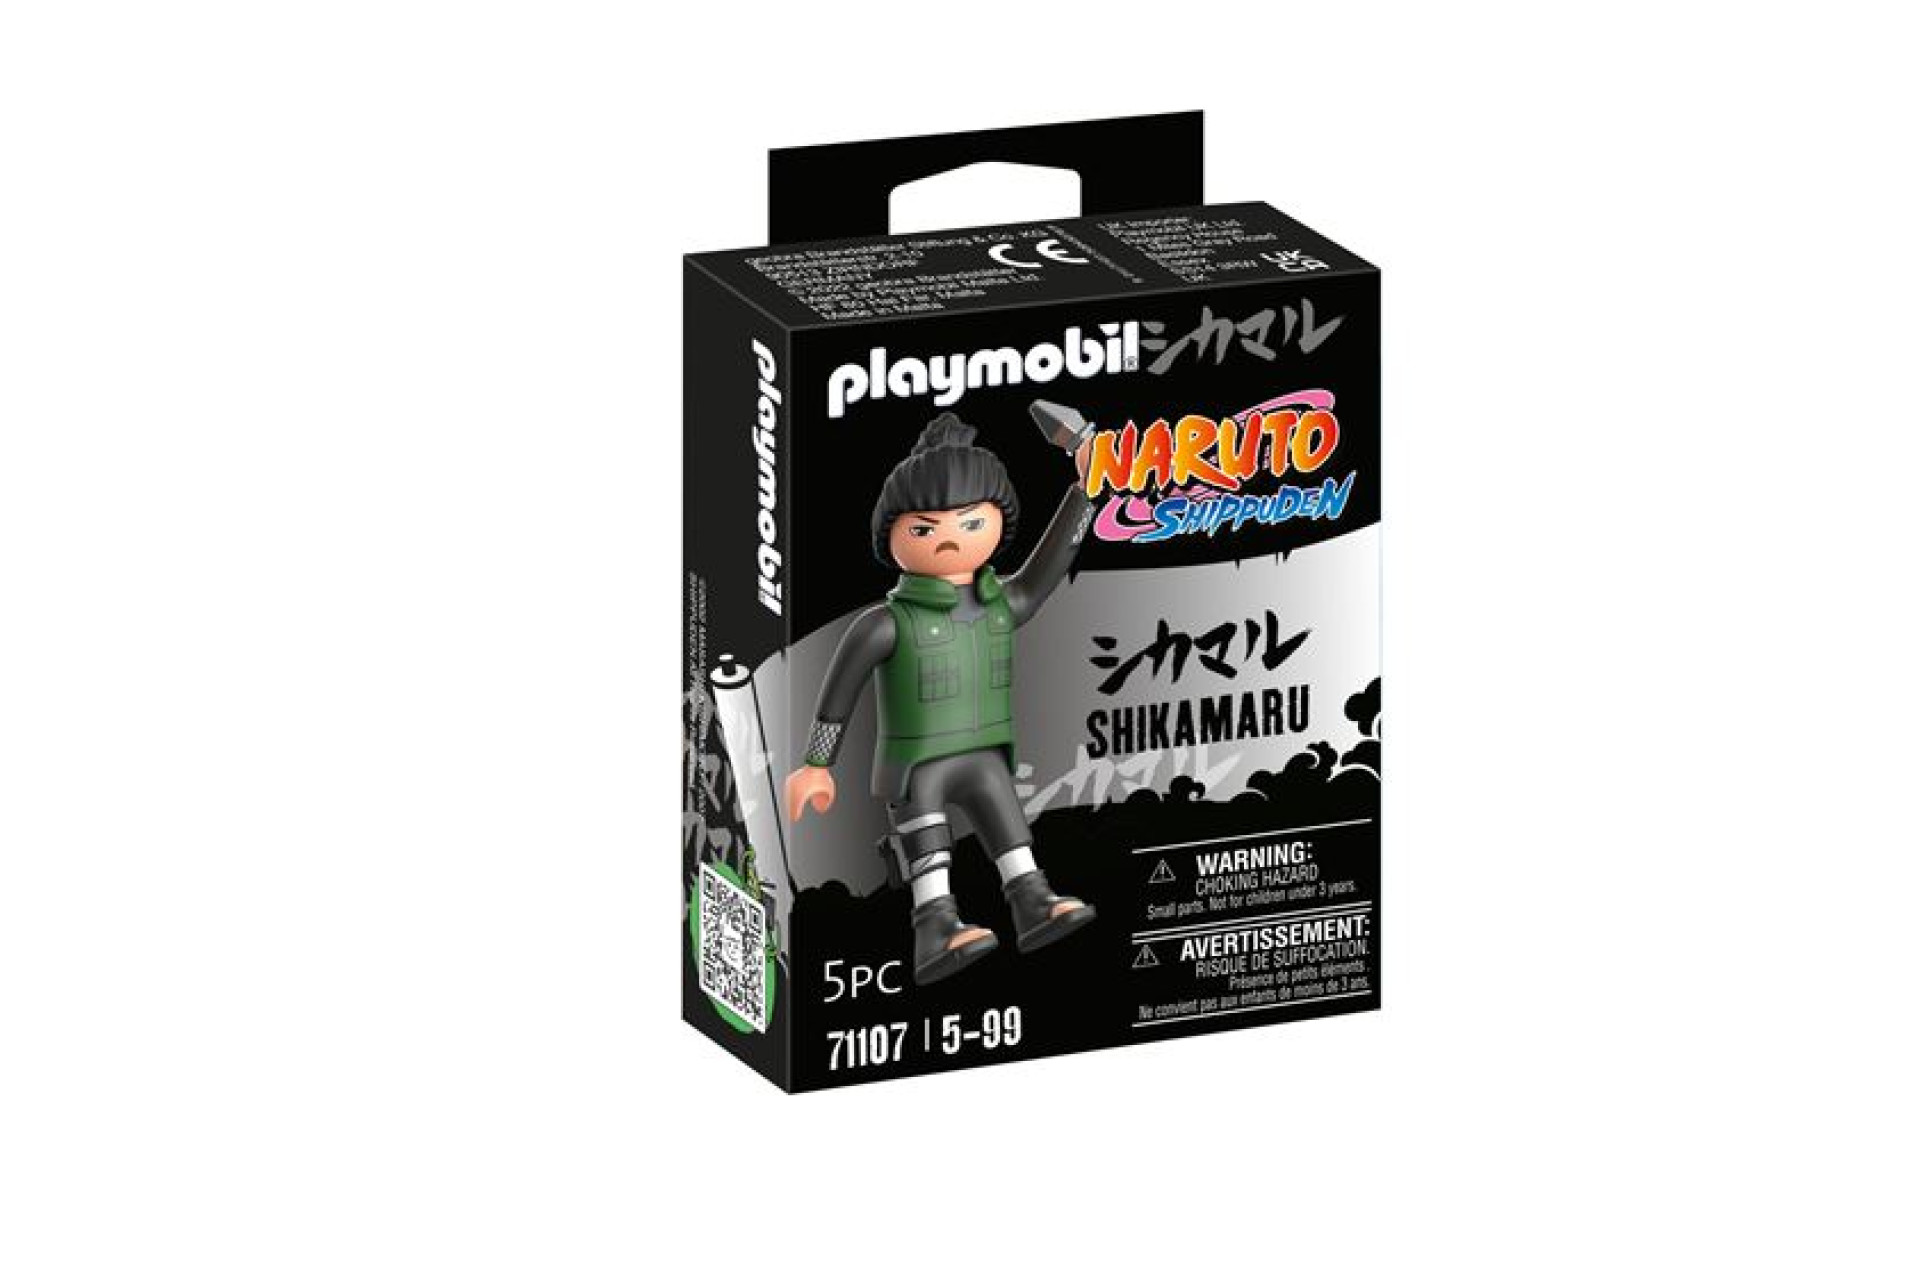 Acheter Playmobil Naruto 71107 Shikamaru